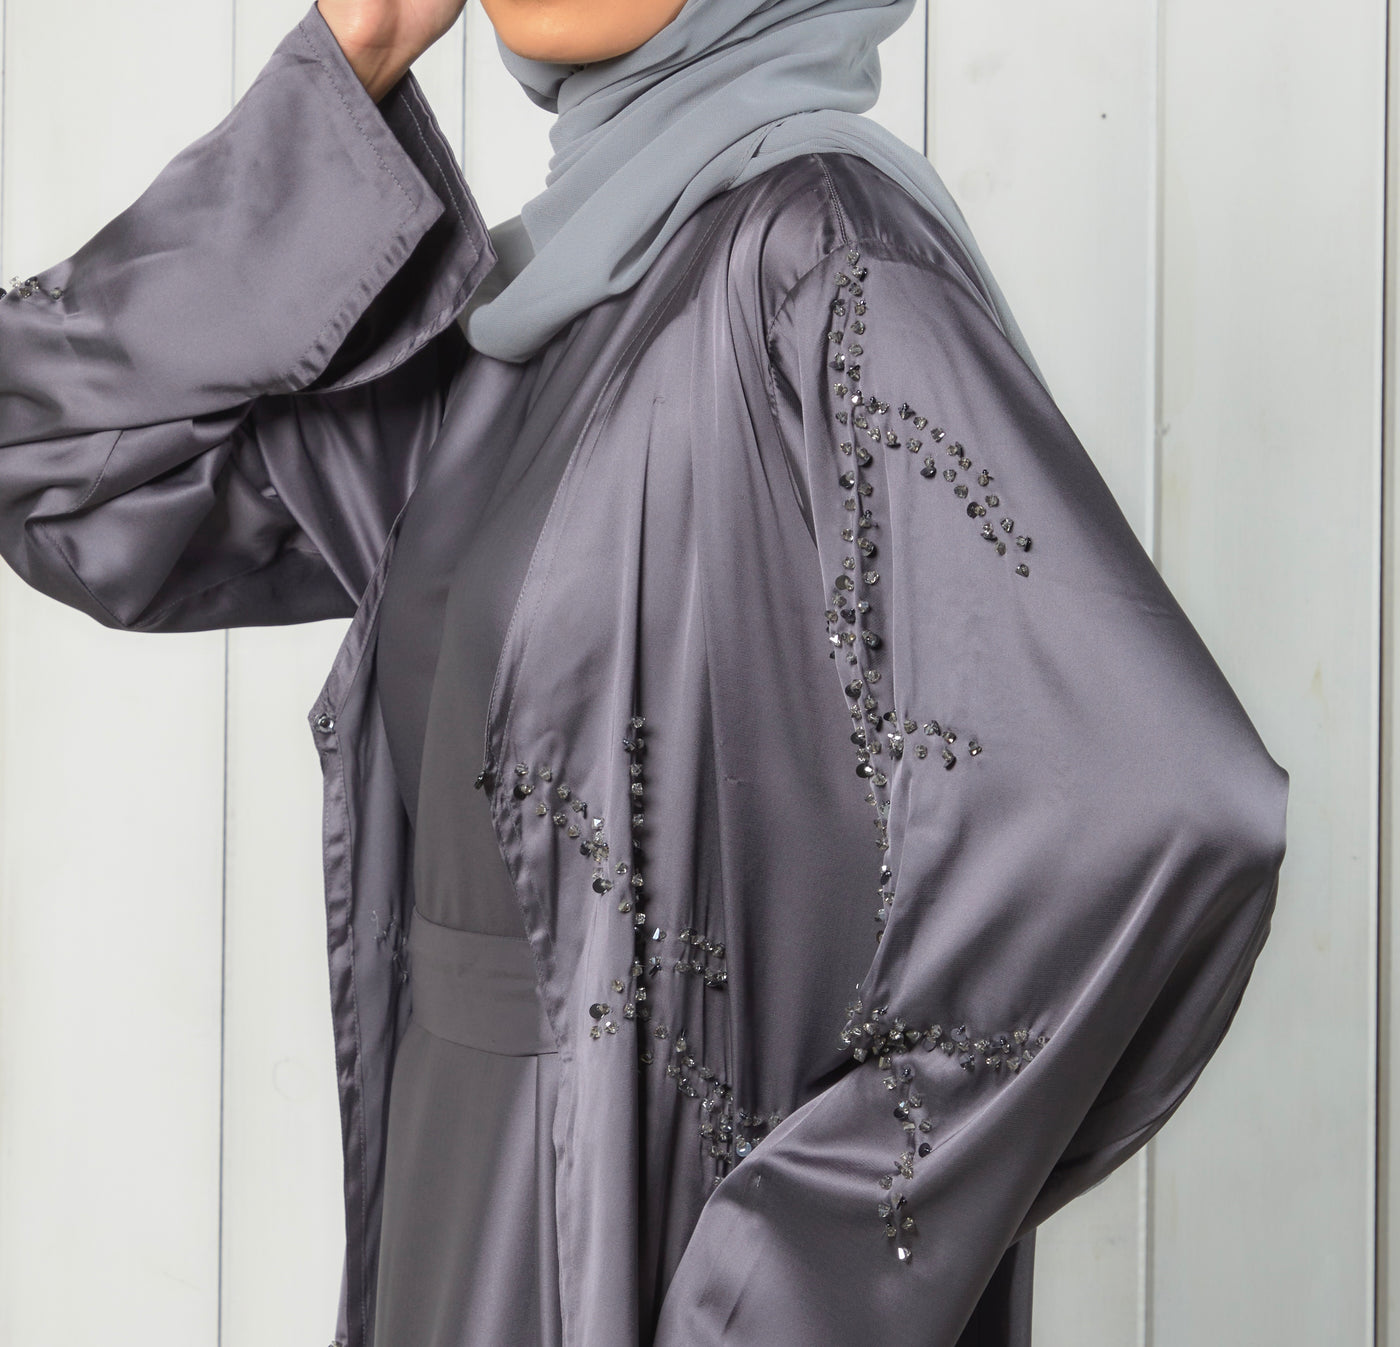 satin grey abaya with embellishments and matching slip